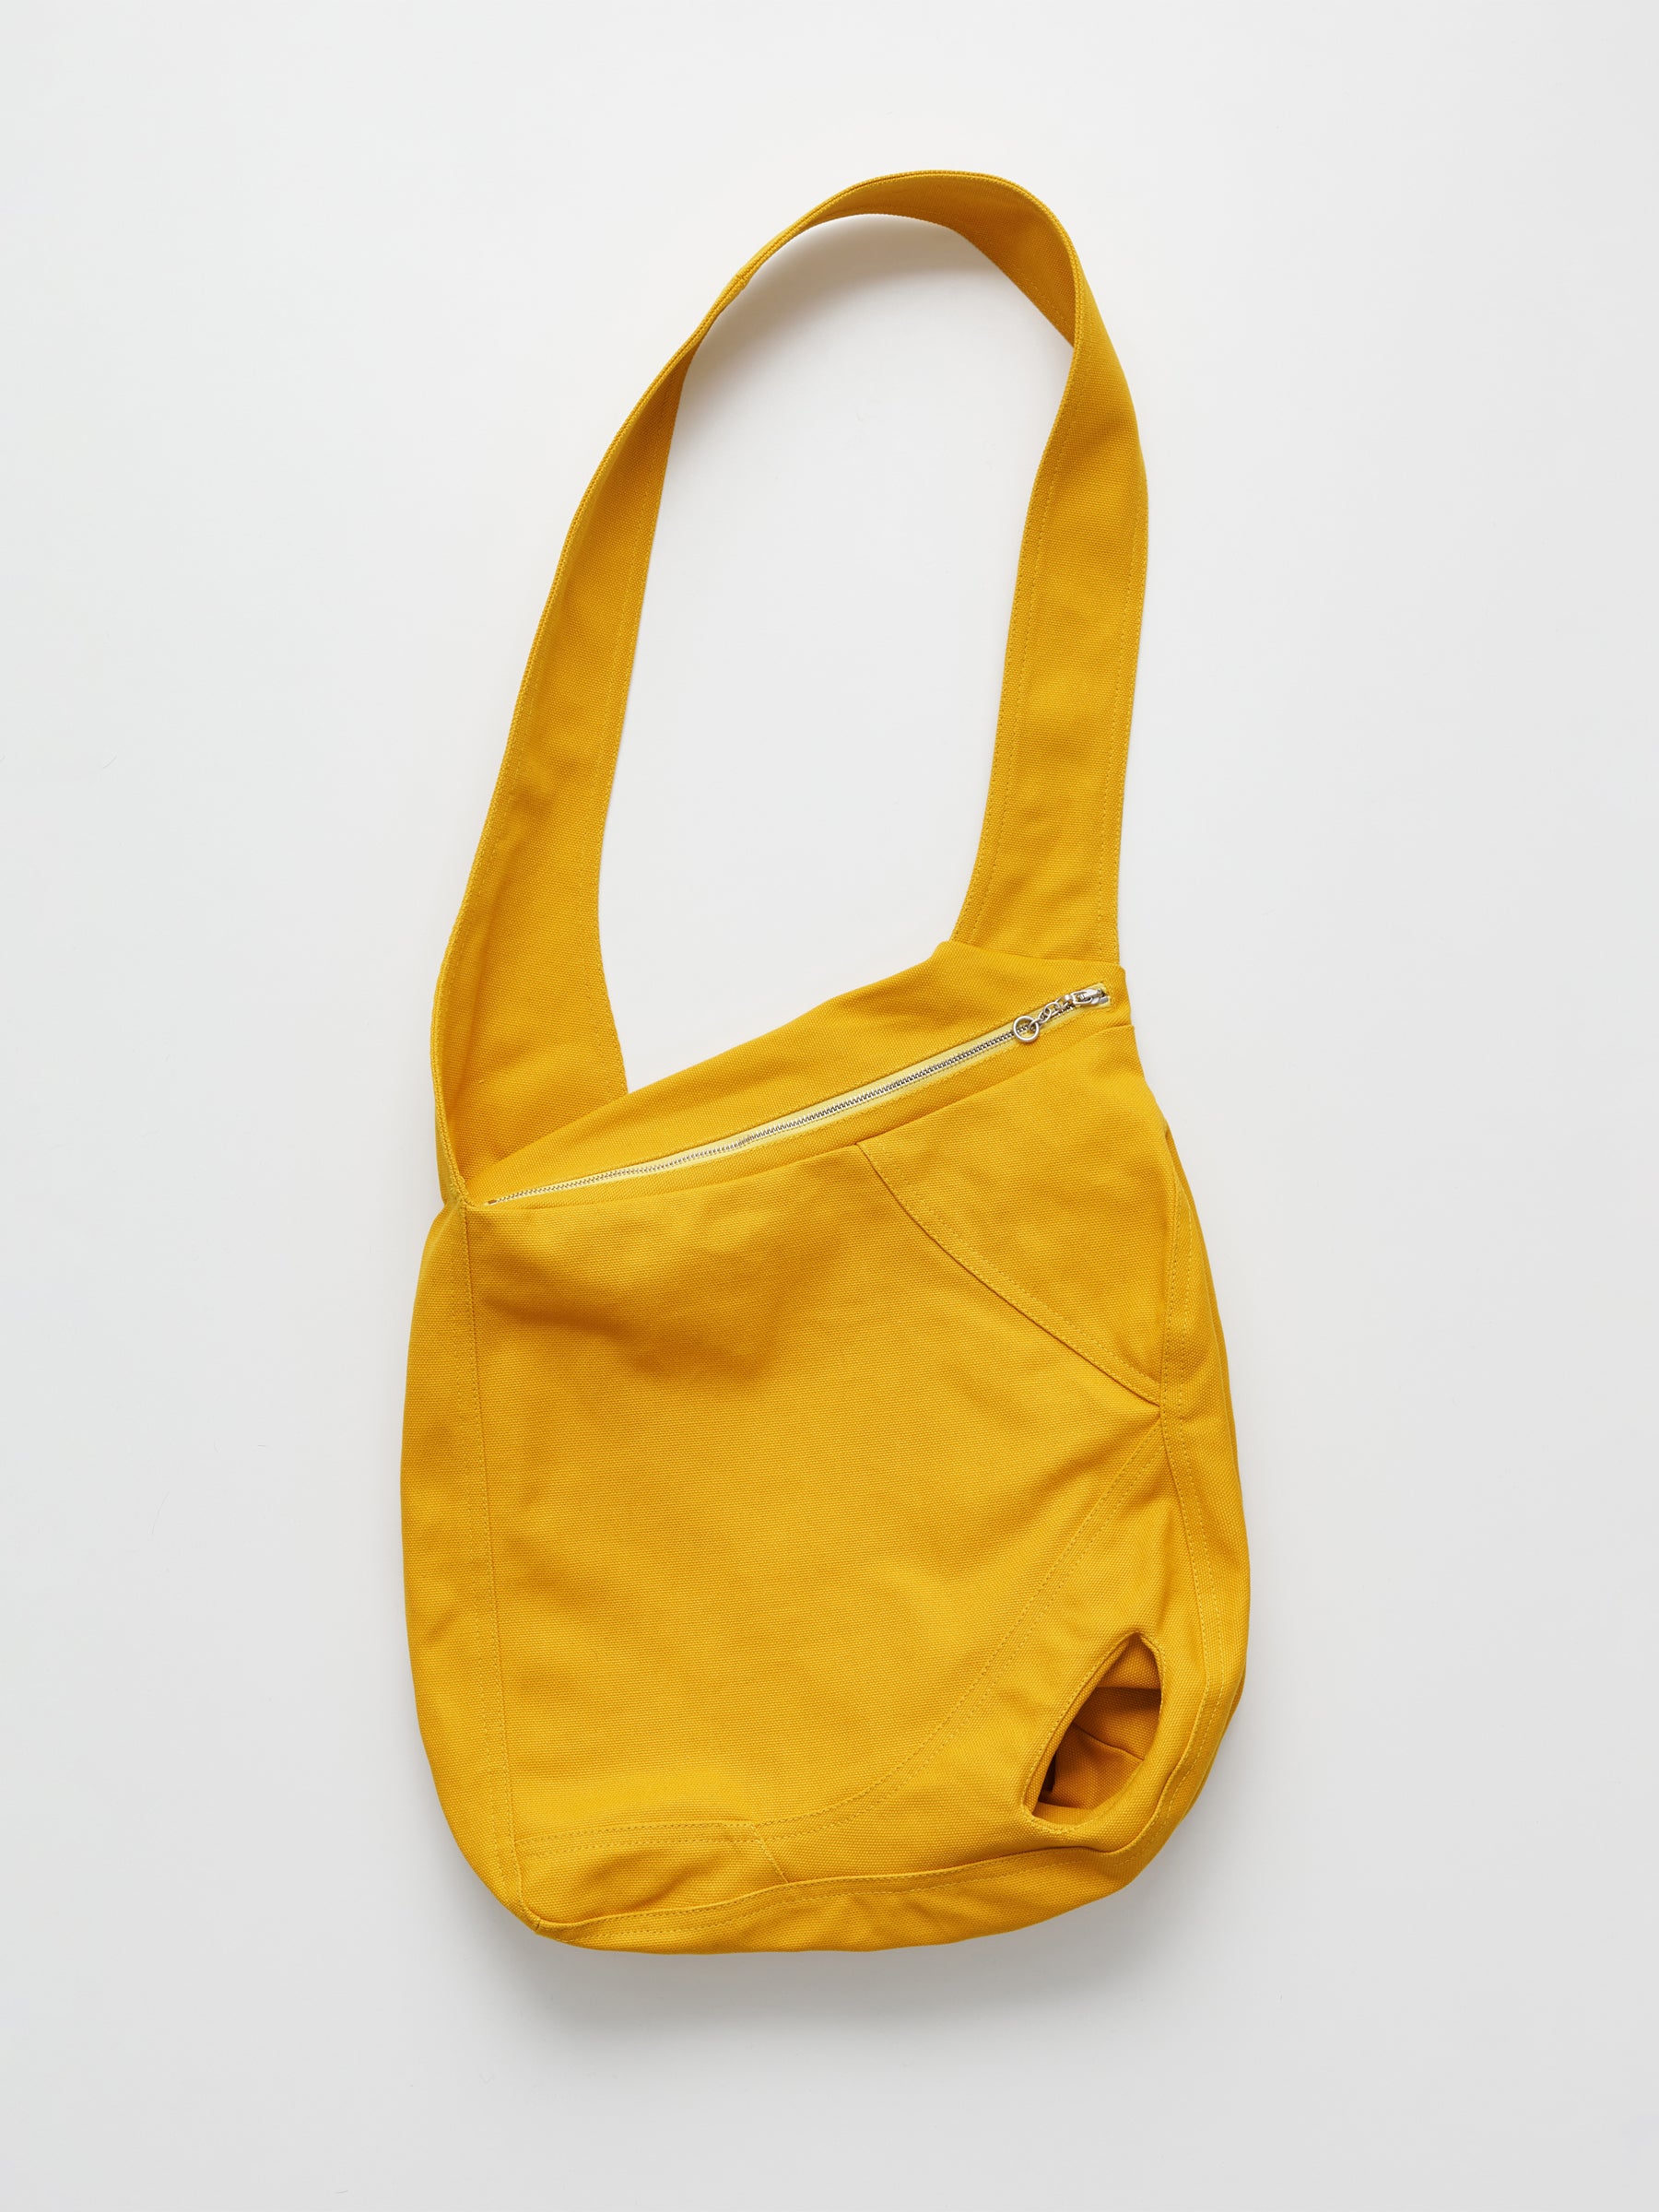 Kiko Kostadinov Deultum Bag Mustard Yellow